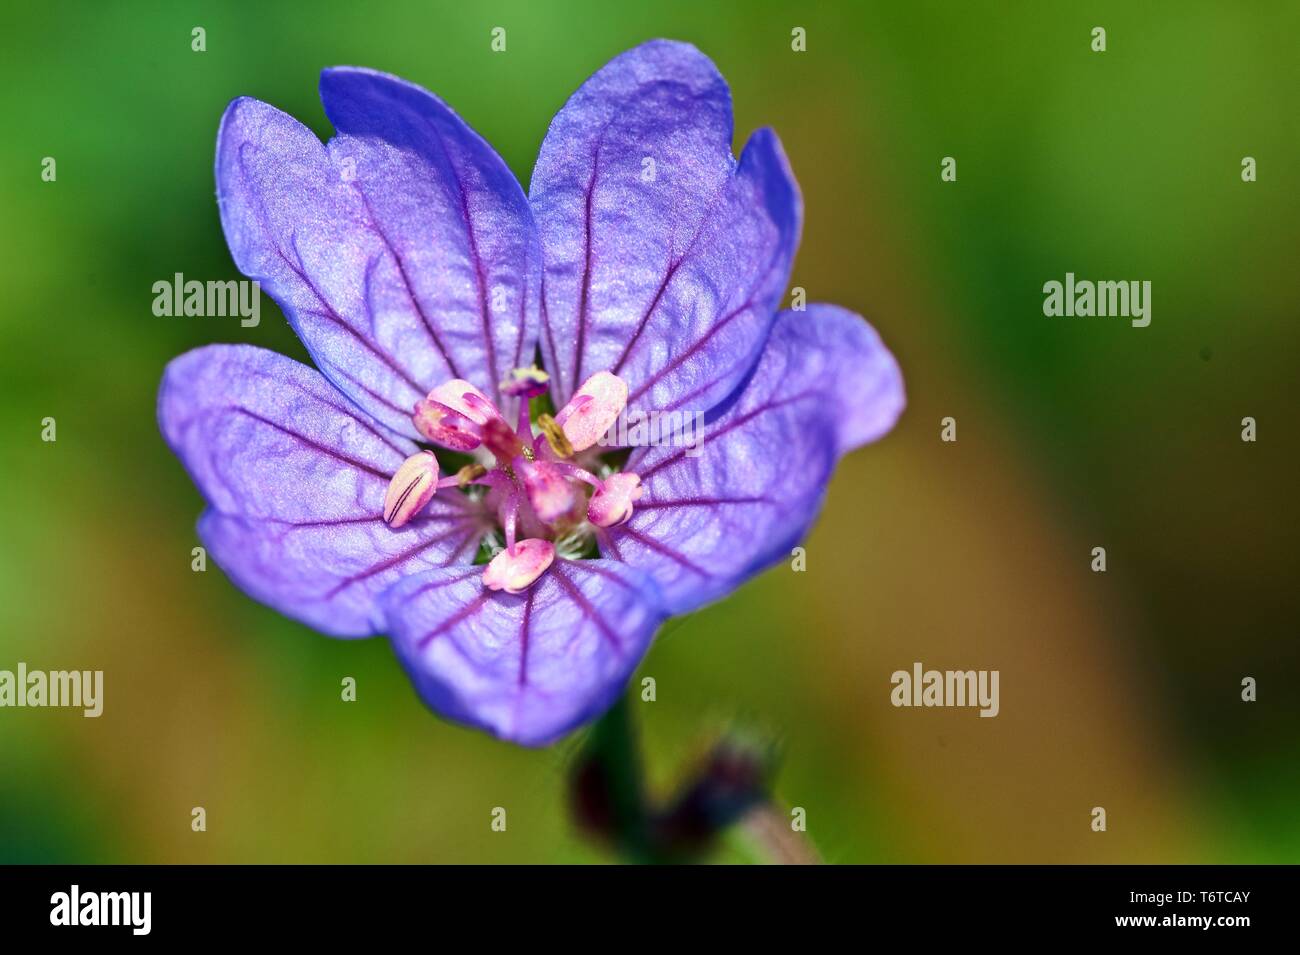 Very small pink flower on a green background - Geranium pusillum Stock Photo